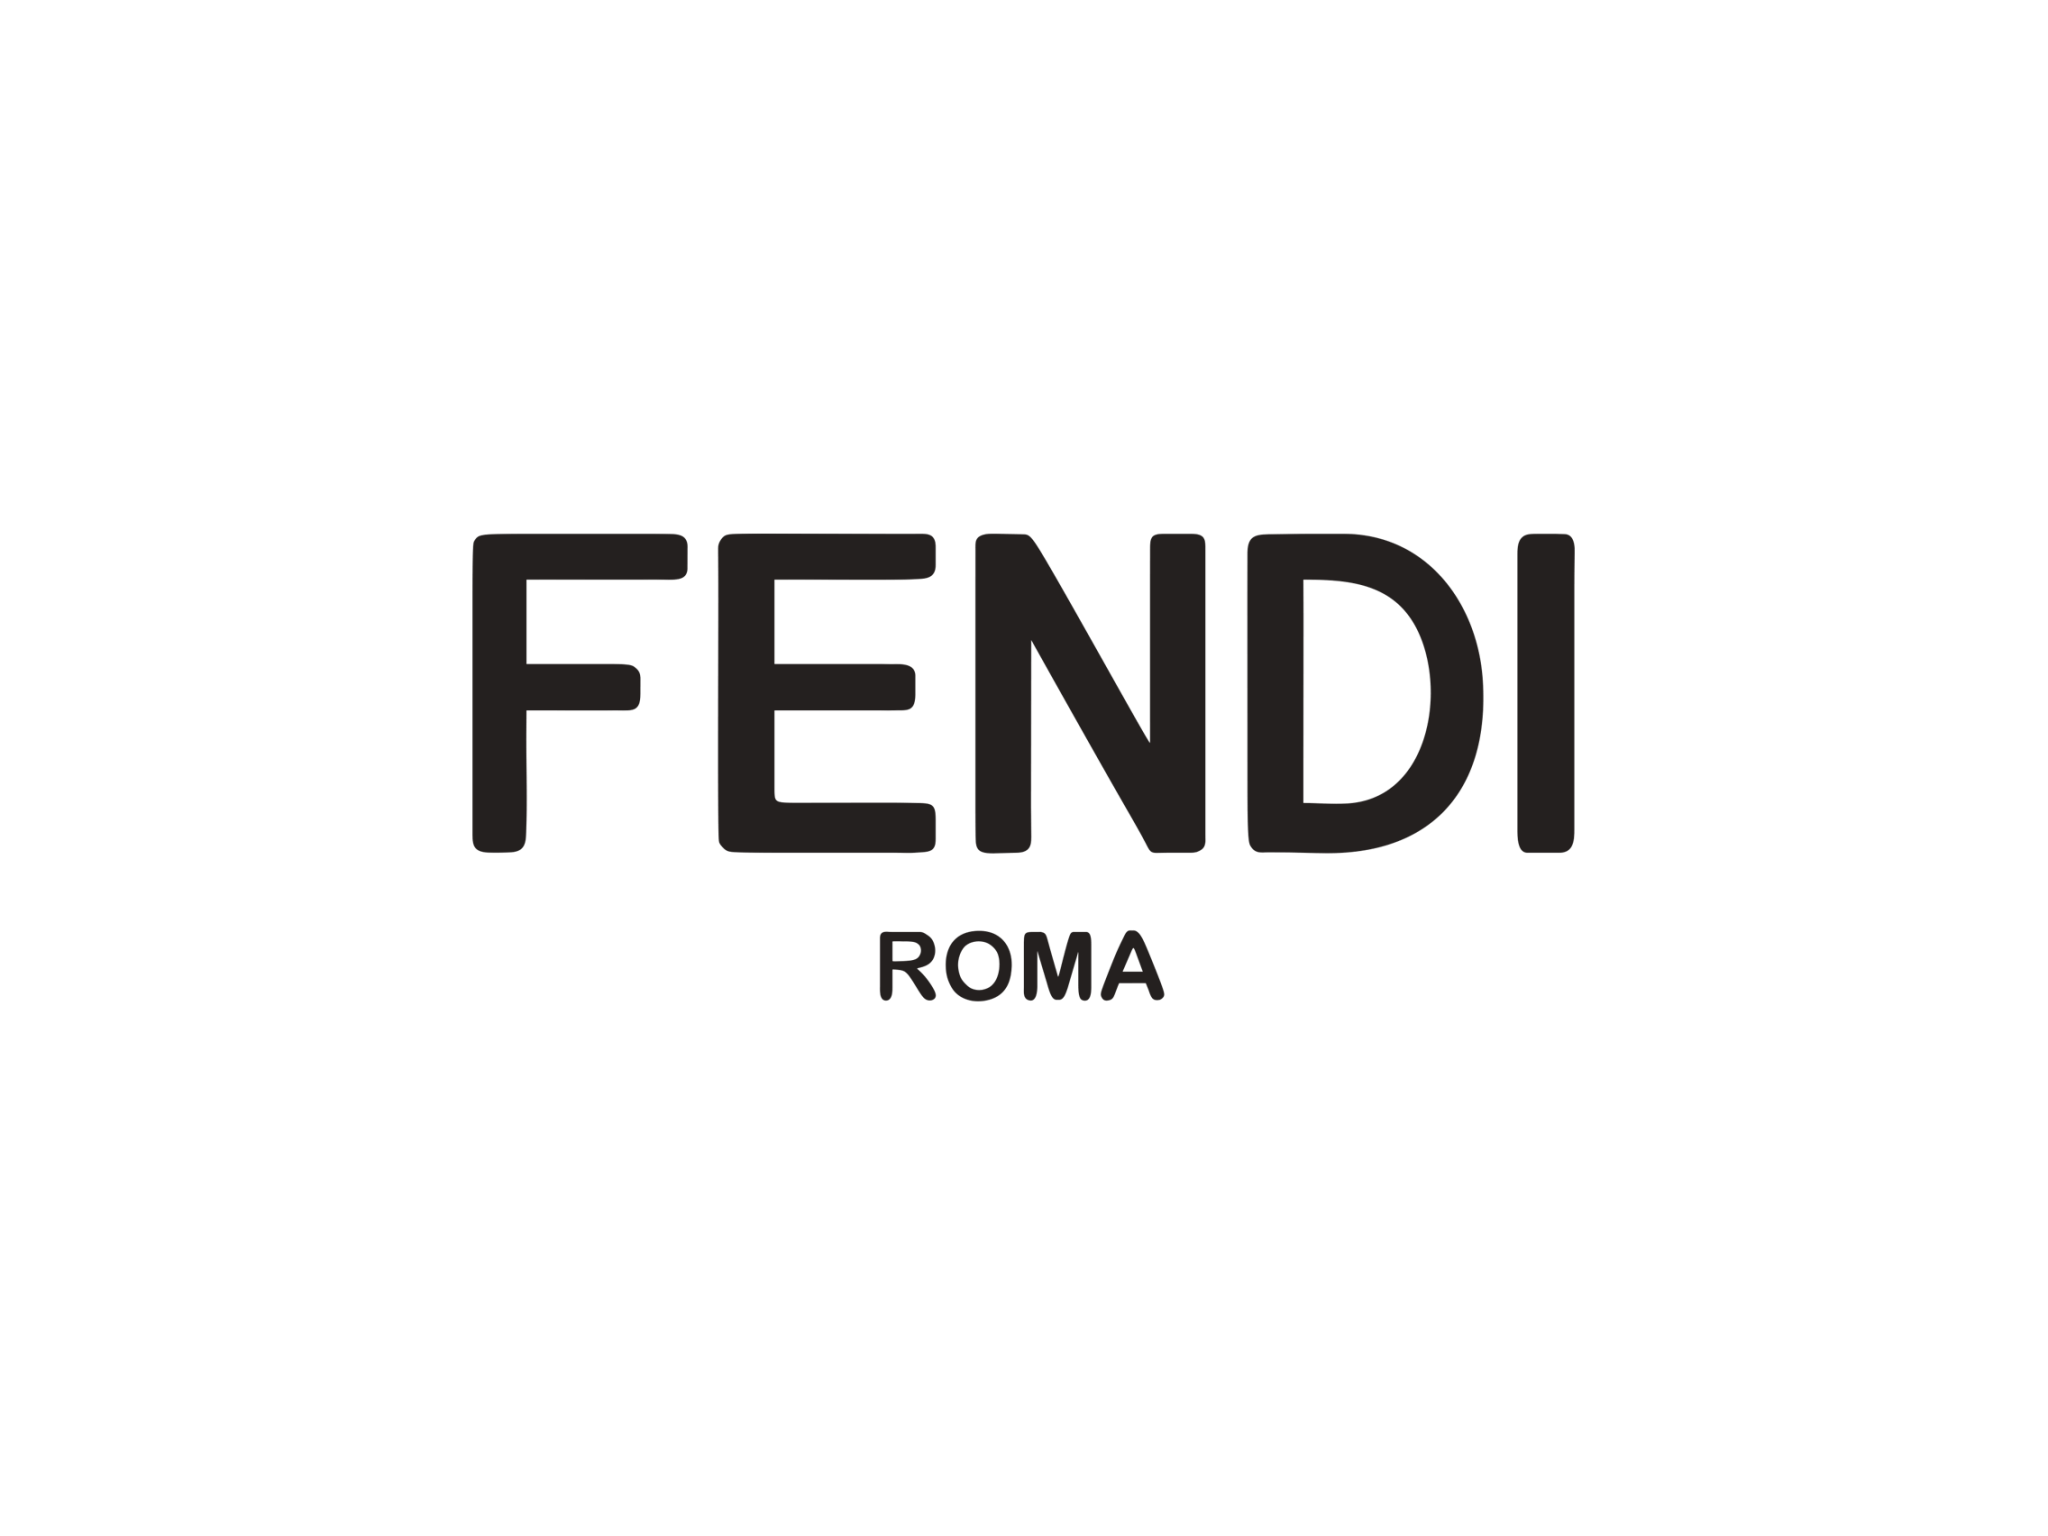 Fendi logo png - Download Free Png Images